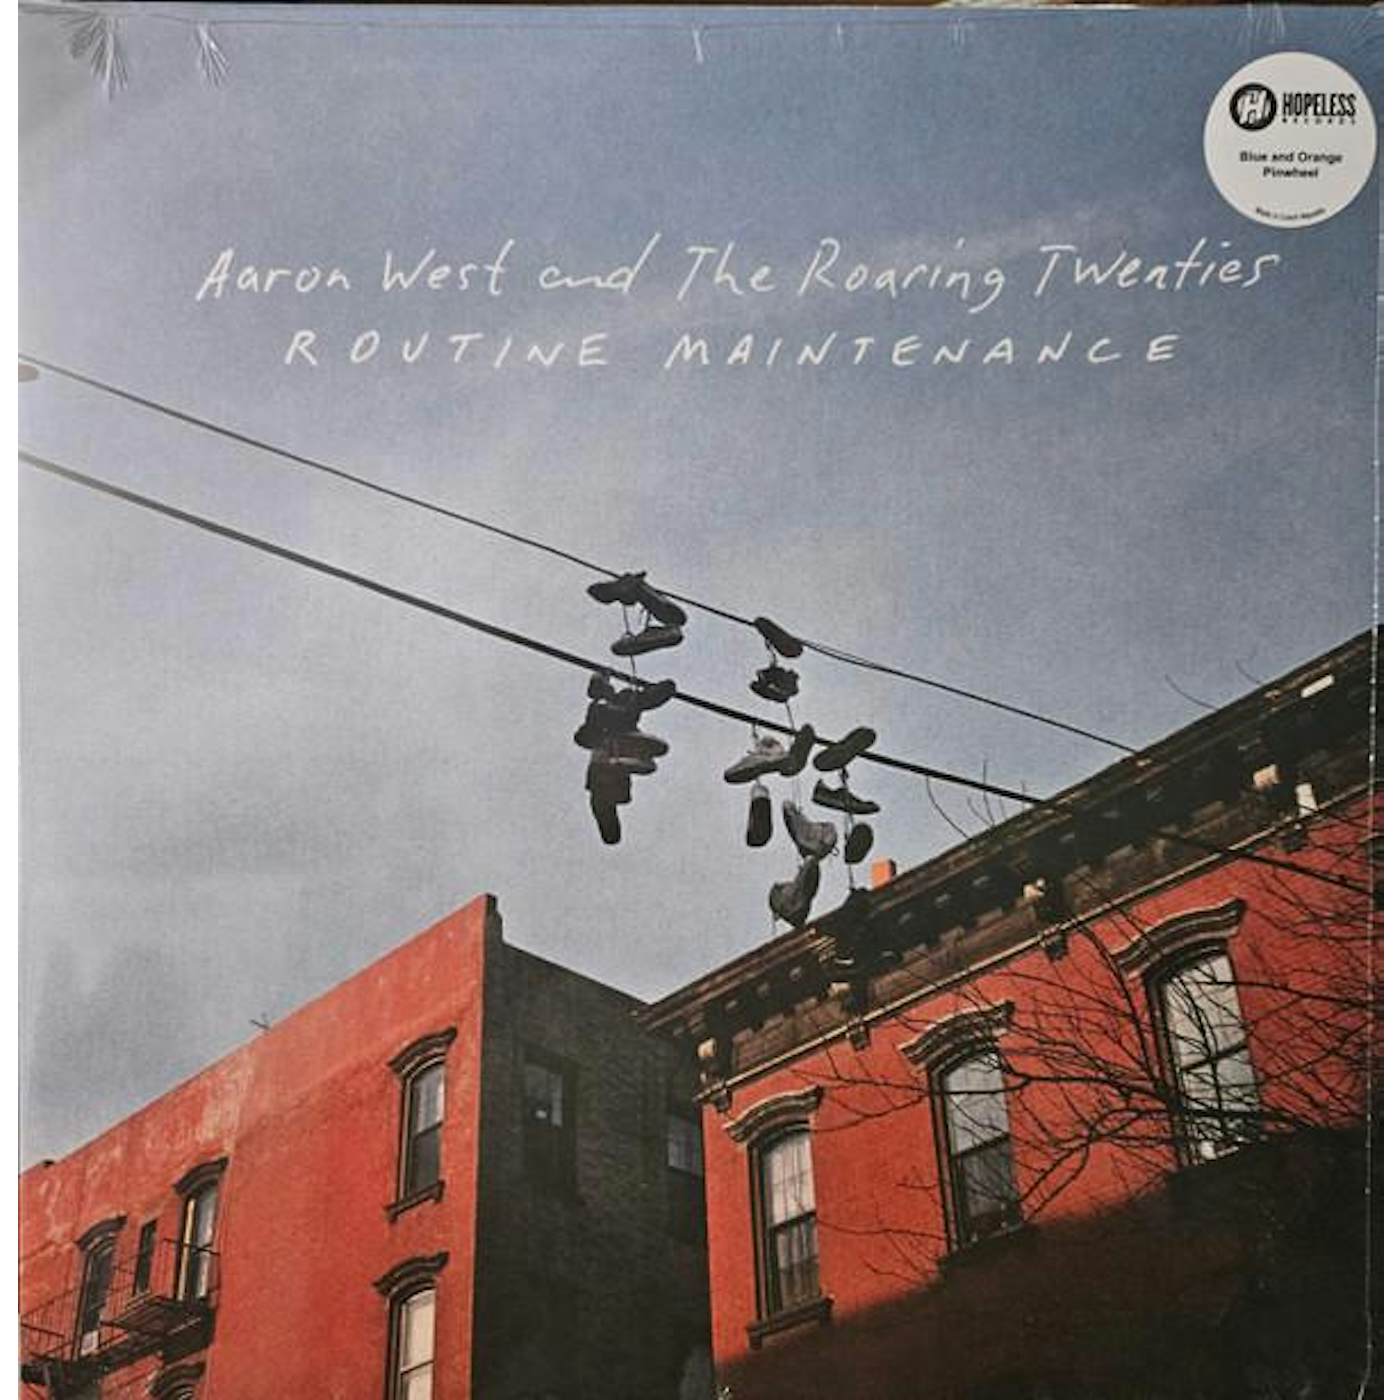 Aaron West and The Roaring Twenties Routine Maintenance (Blue/Orange Vinyl/Reissue) Vinyl Record